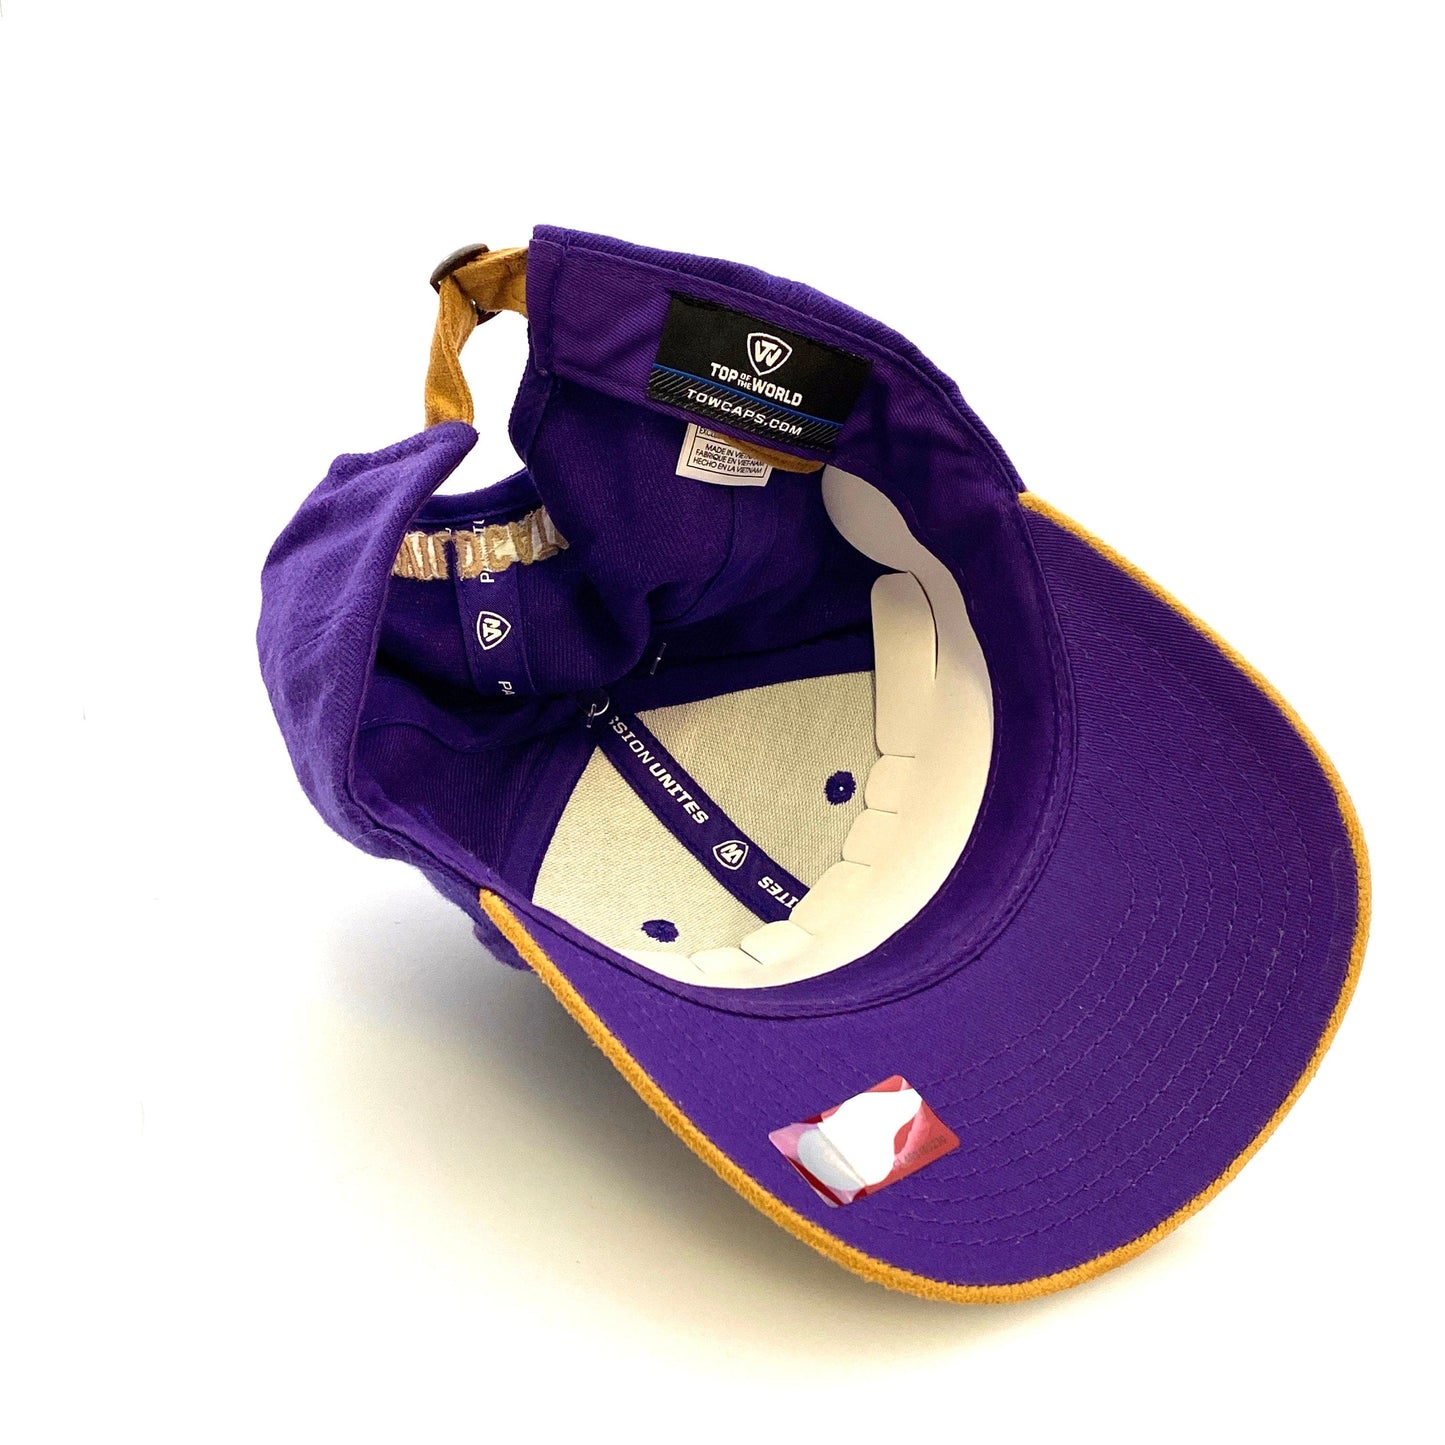 Kansas State University Mens Purple Adjustable Baseball Hat NEW